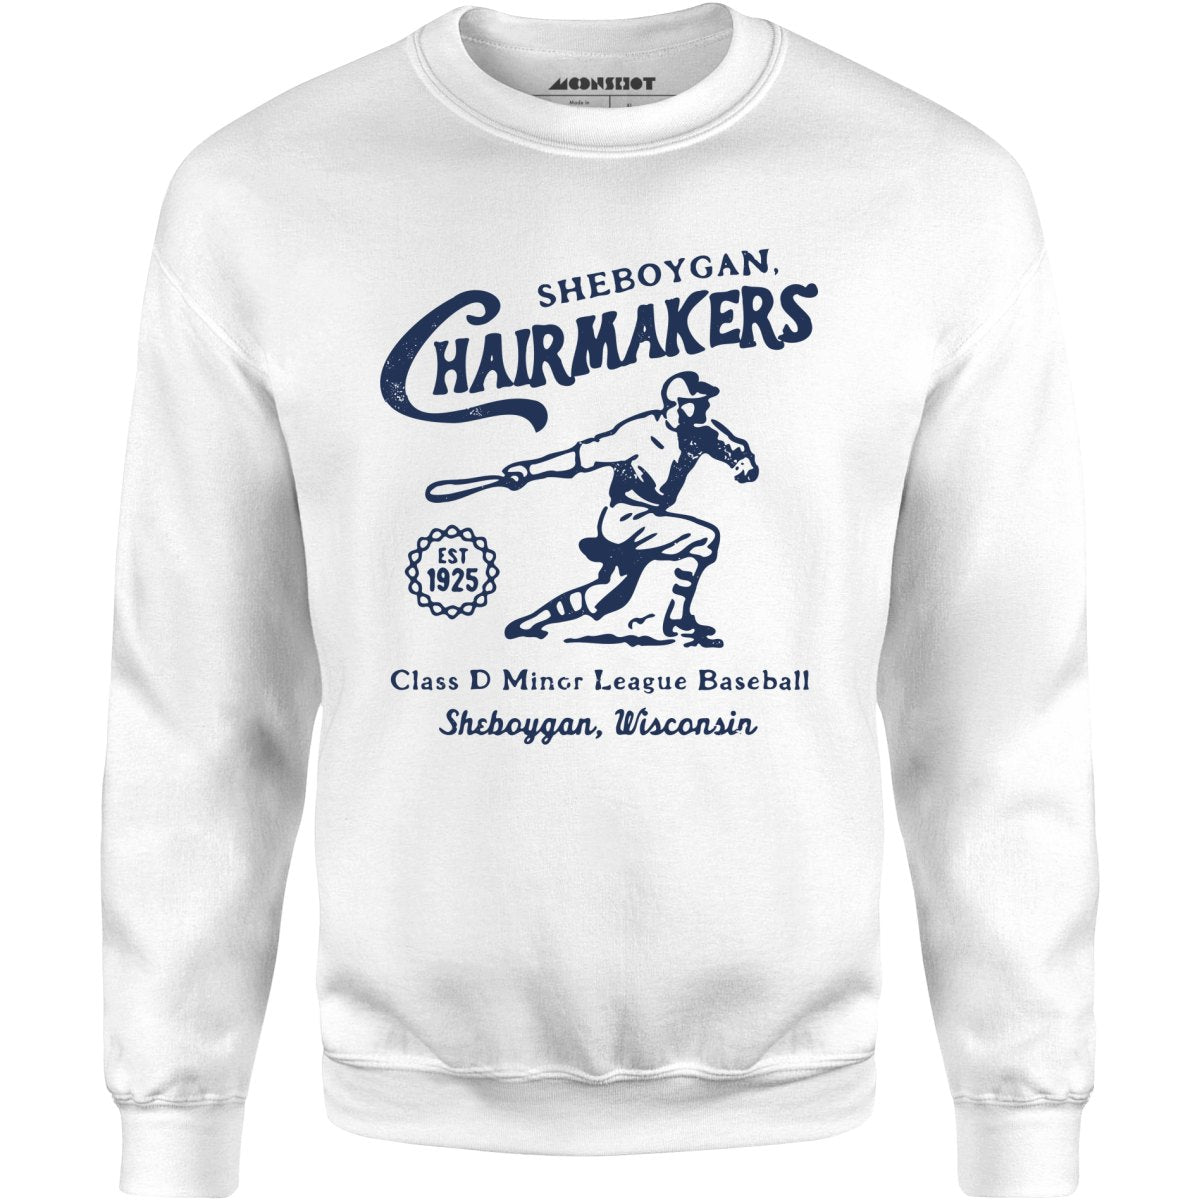 Sheboygan Chairmakers - Wisconsin - Vintage Defunct Baseball Teams - Unisex Sweatshirt